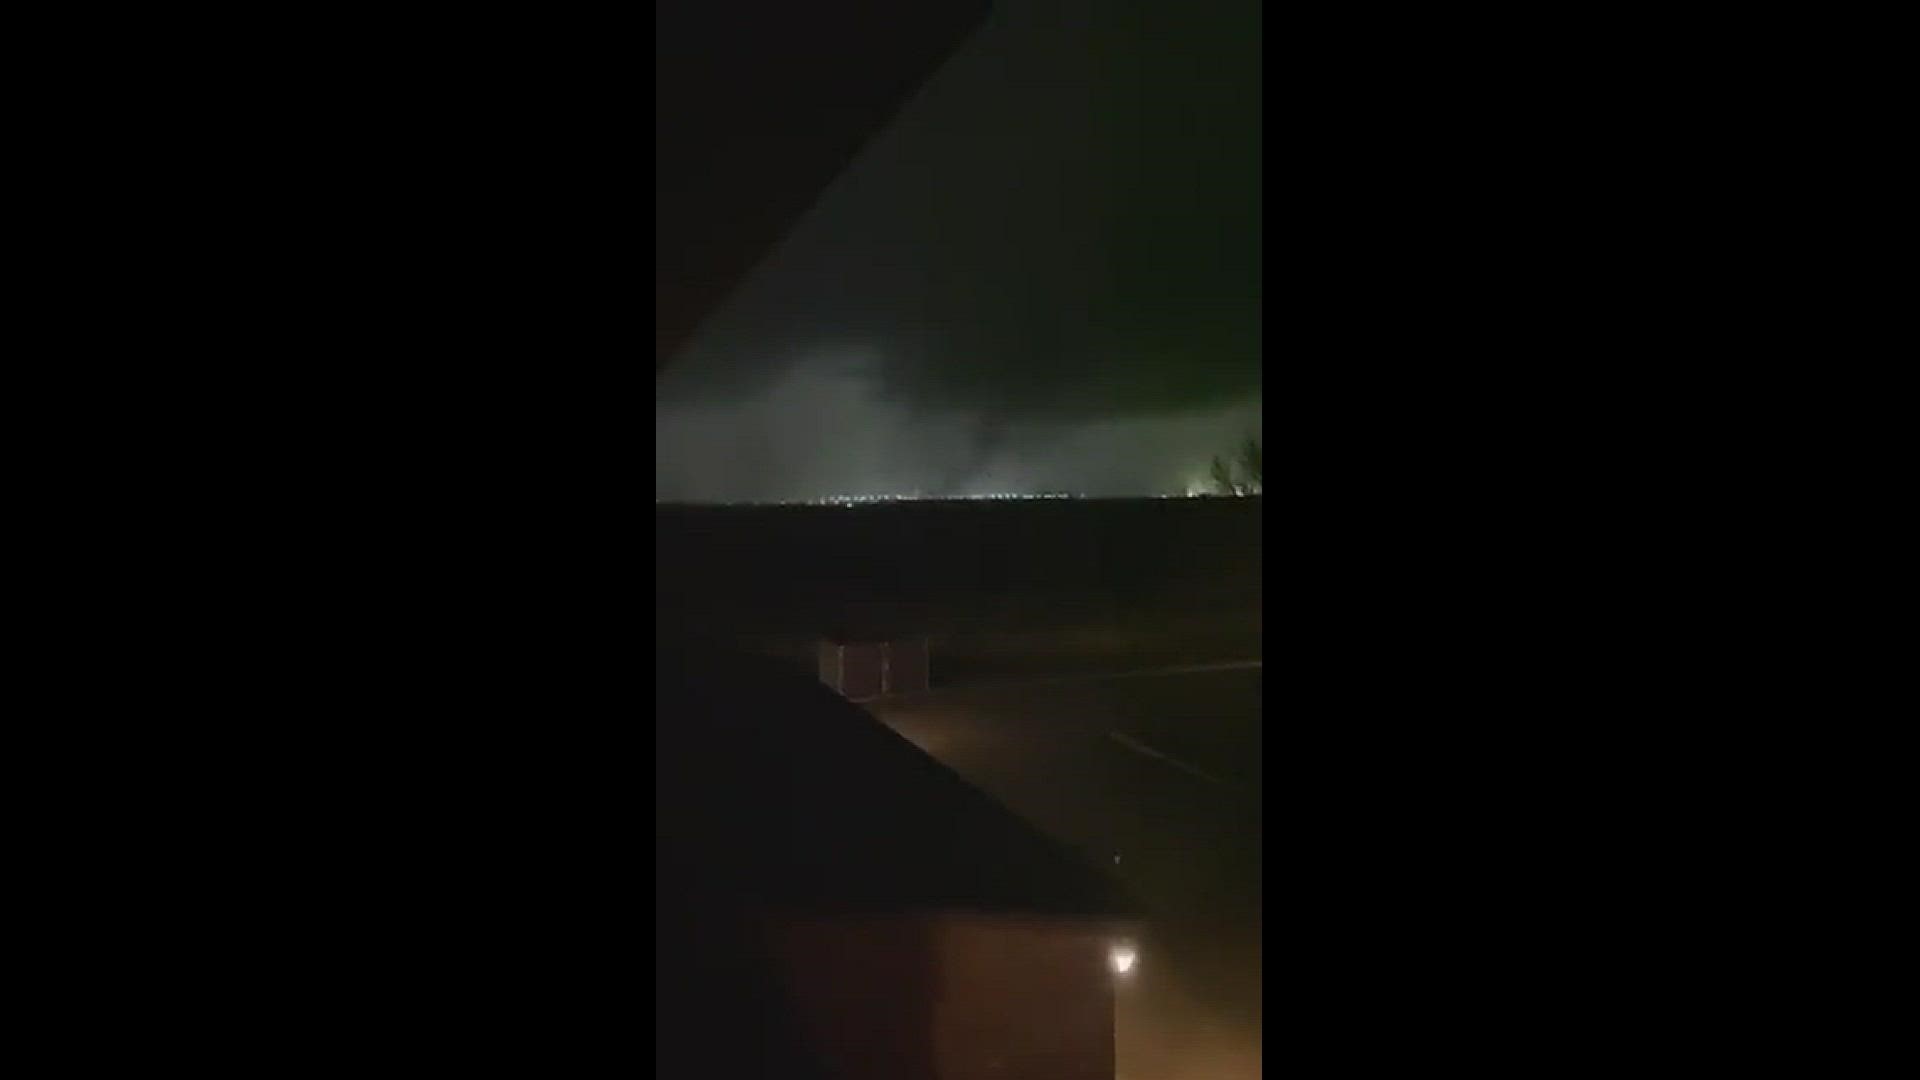 Video shows a tornado in Edwardsville, Illinois on December 10, 2021.